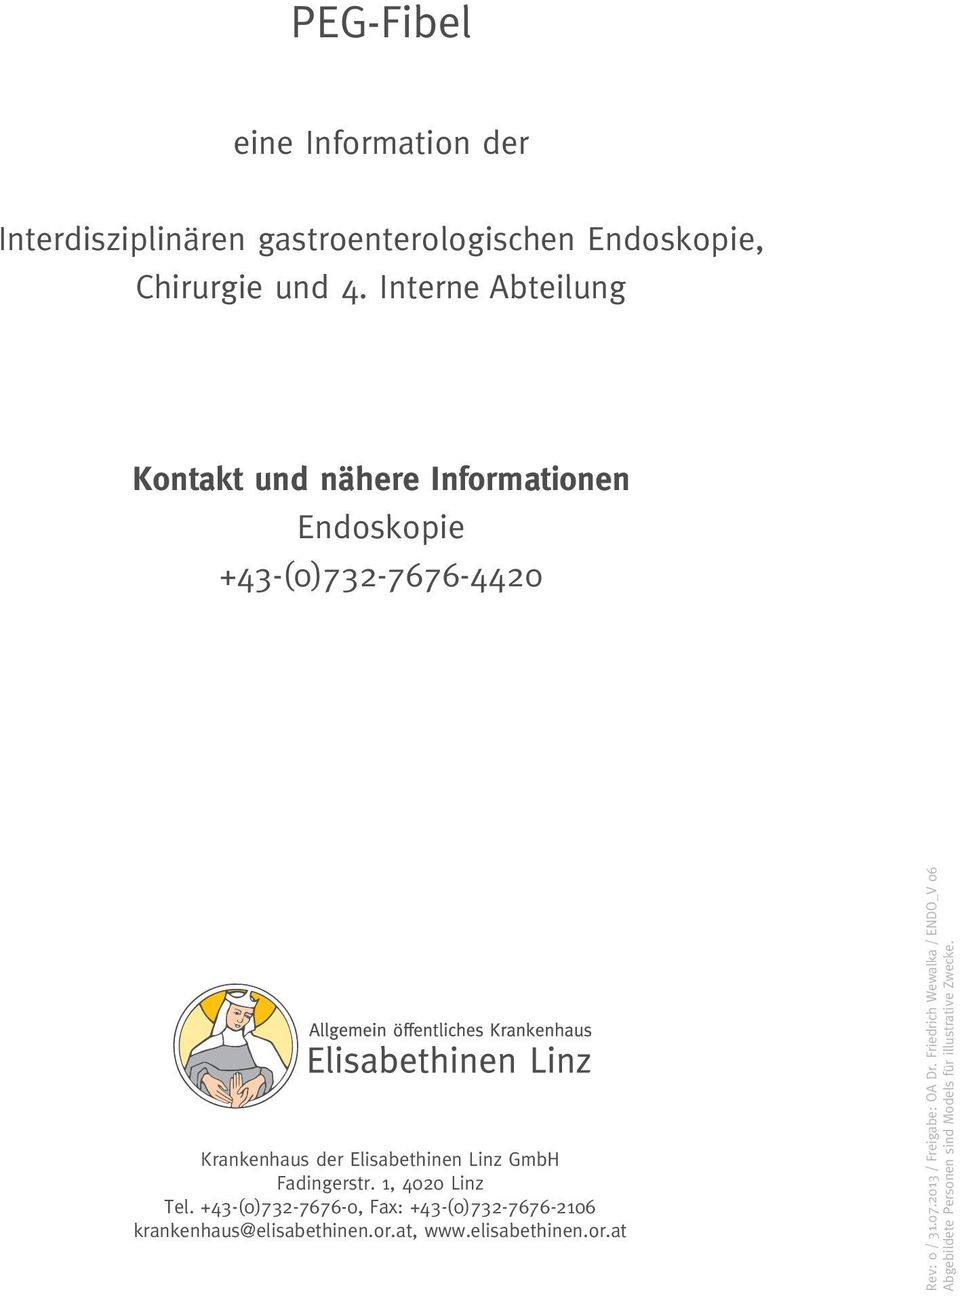 GmbH Fadingerstr. 1, 4020 Linz Tel. +43-(0)732-7676-0, Fax: +43-(0)732-7676-2106 krankenhaus@elisabethinen.or.at, www.